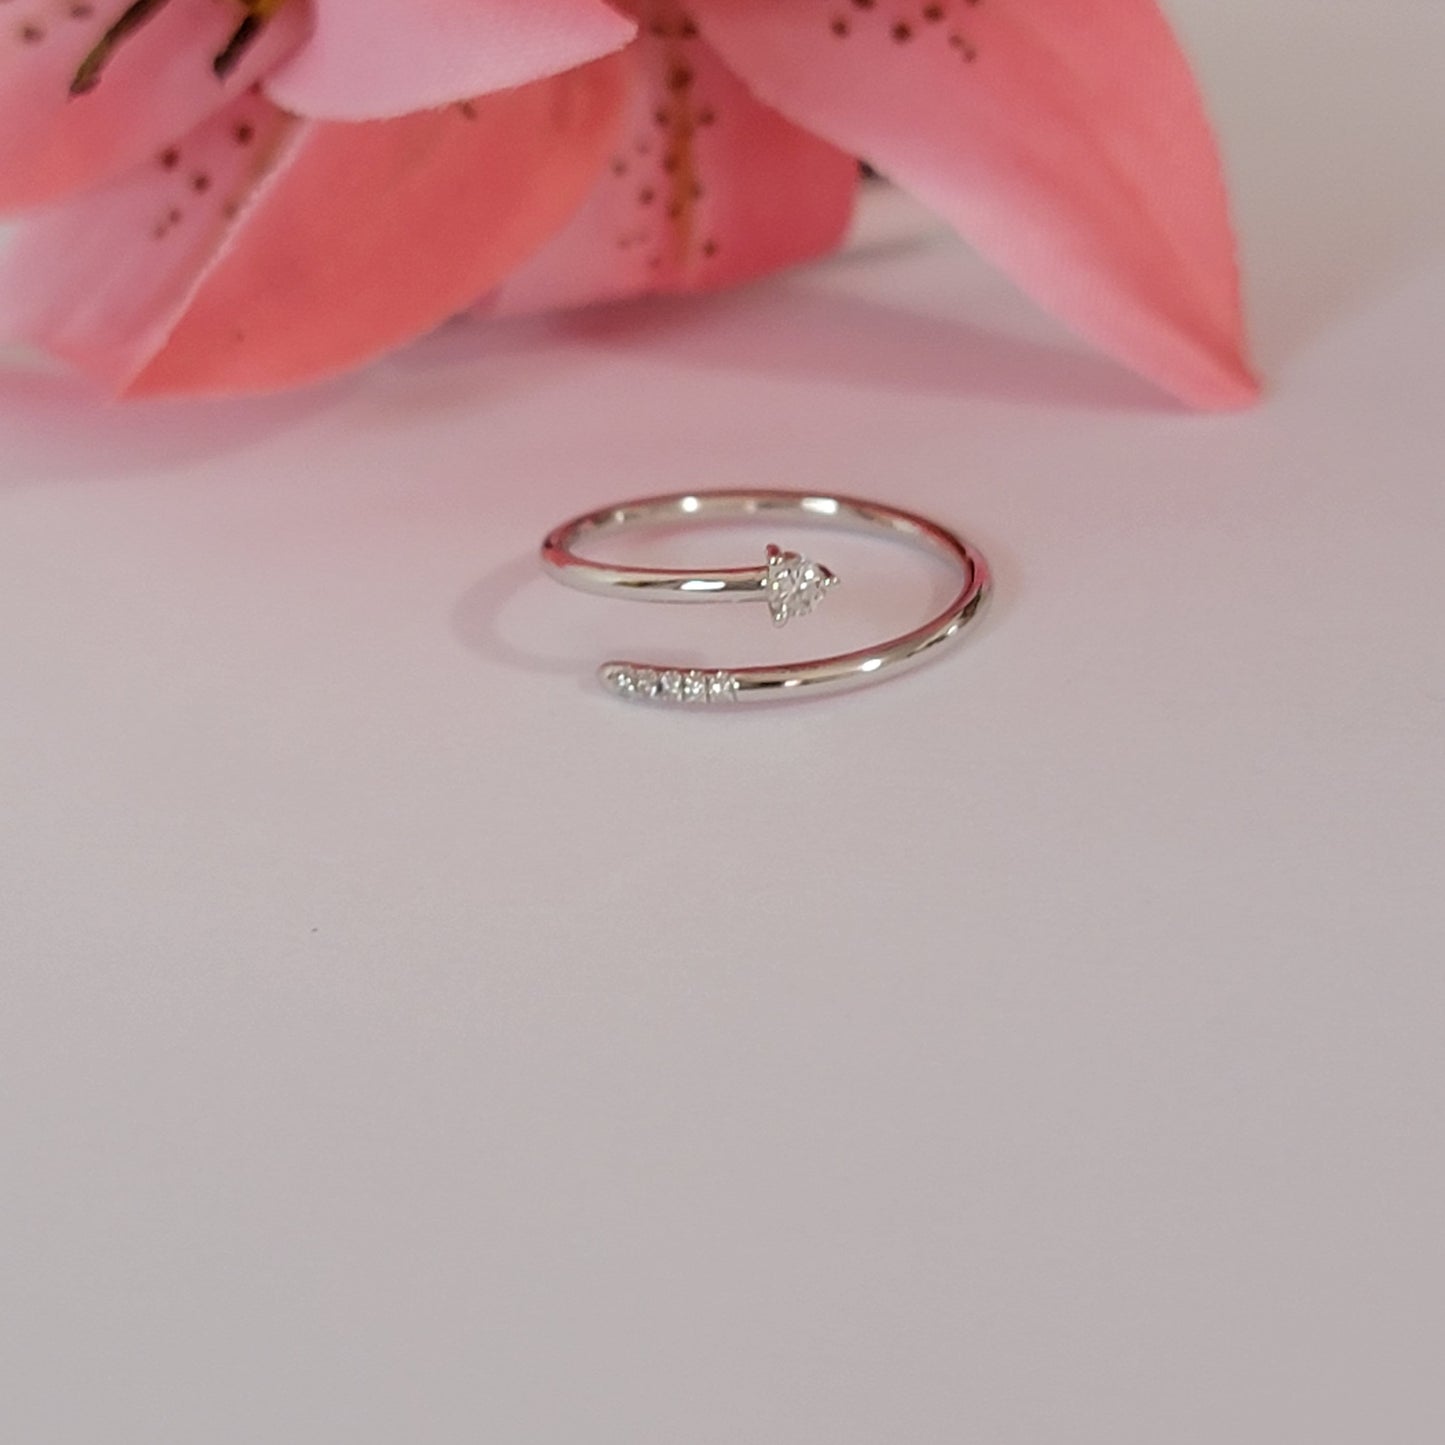 14k Solid Gold Spiral Diamond Ring, Diamond Wrap Ring, Spiral Ring, Dainty Diamond Ring, Minimalist Ring, Handmade Jewelry